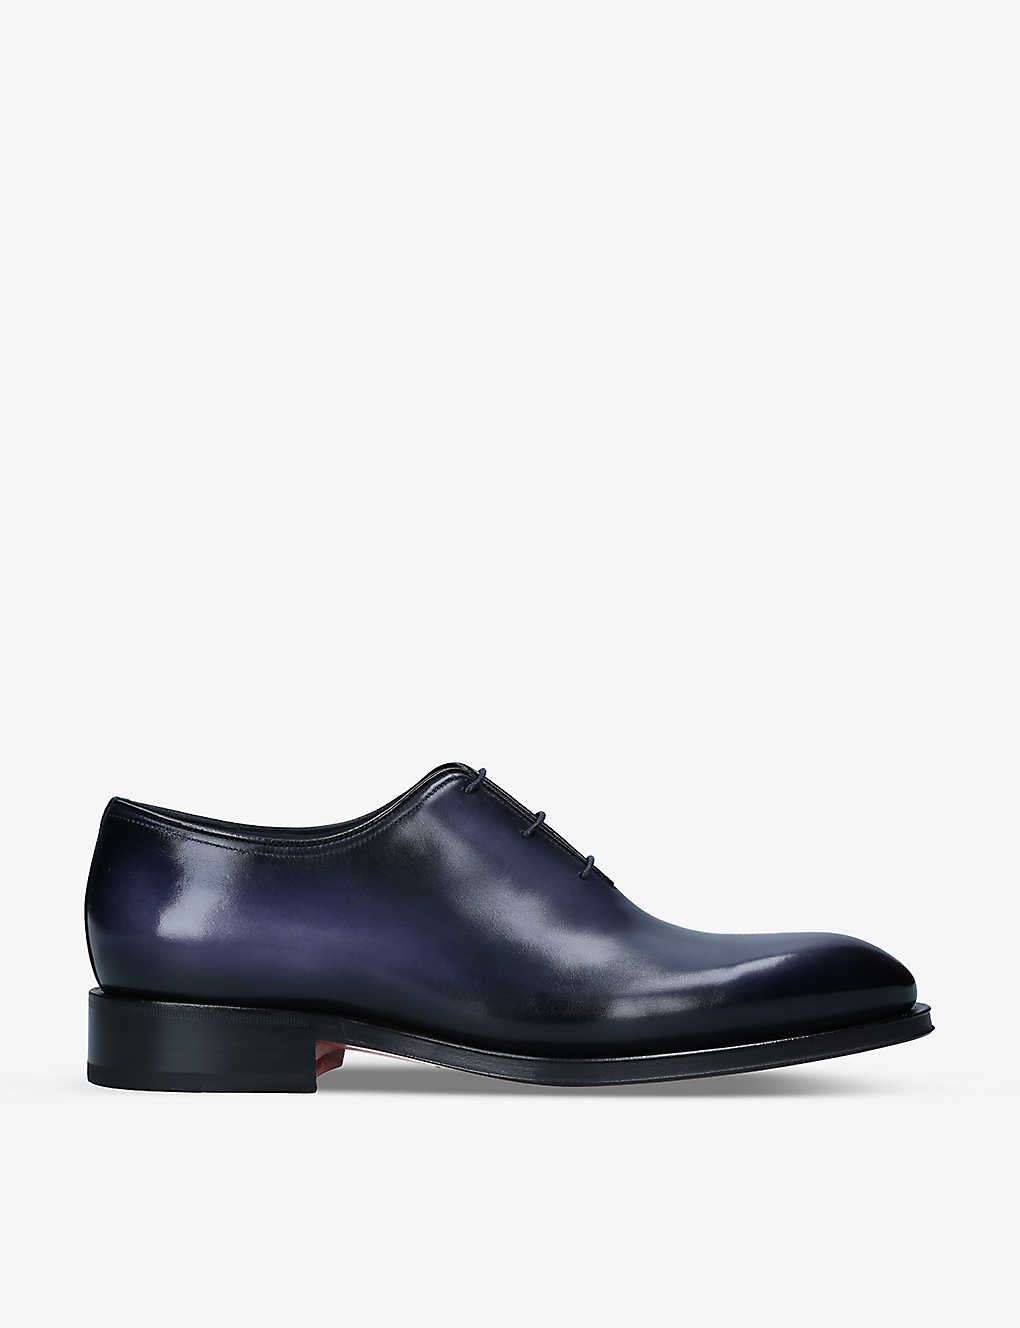 Santoni Mens Navy Carter Wholecut Leather Oxford Shoes